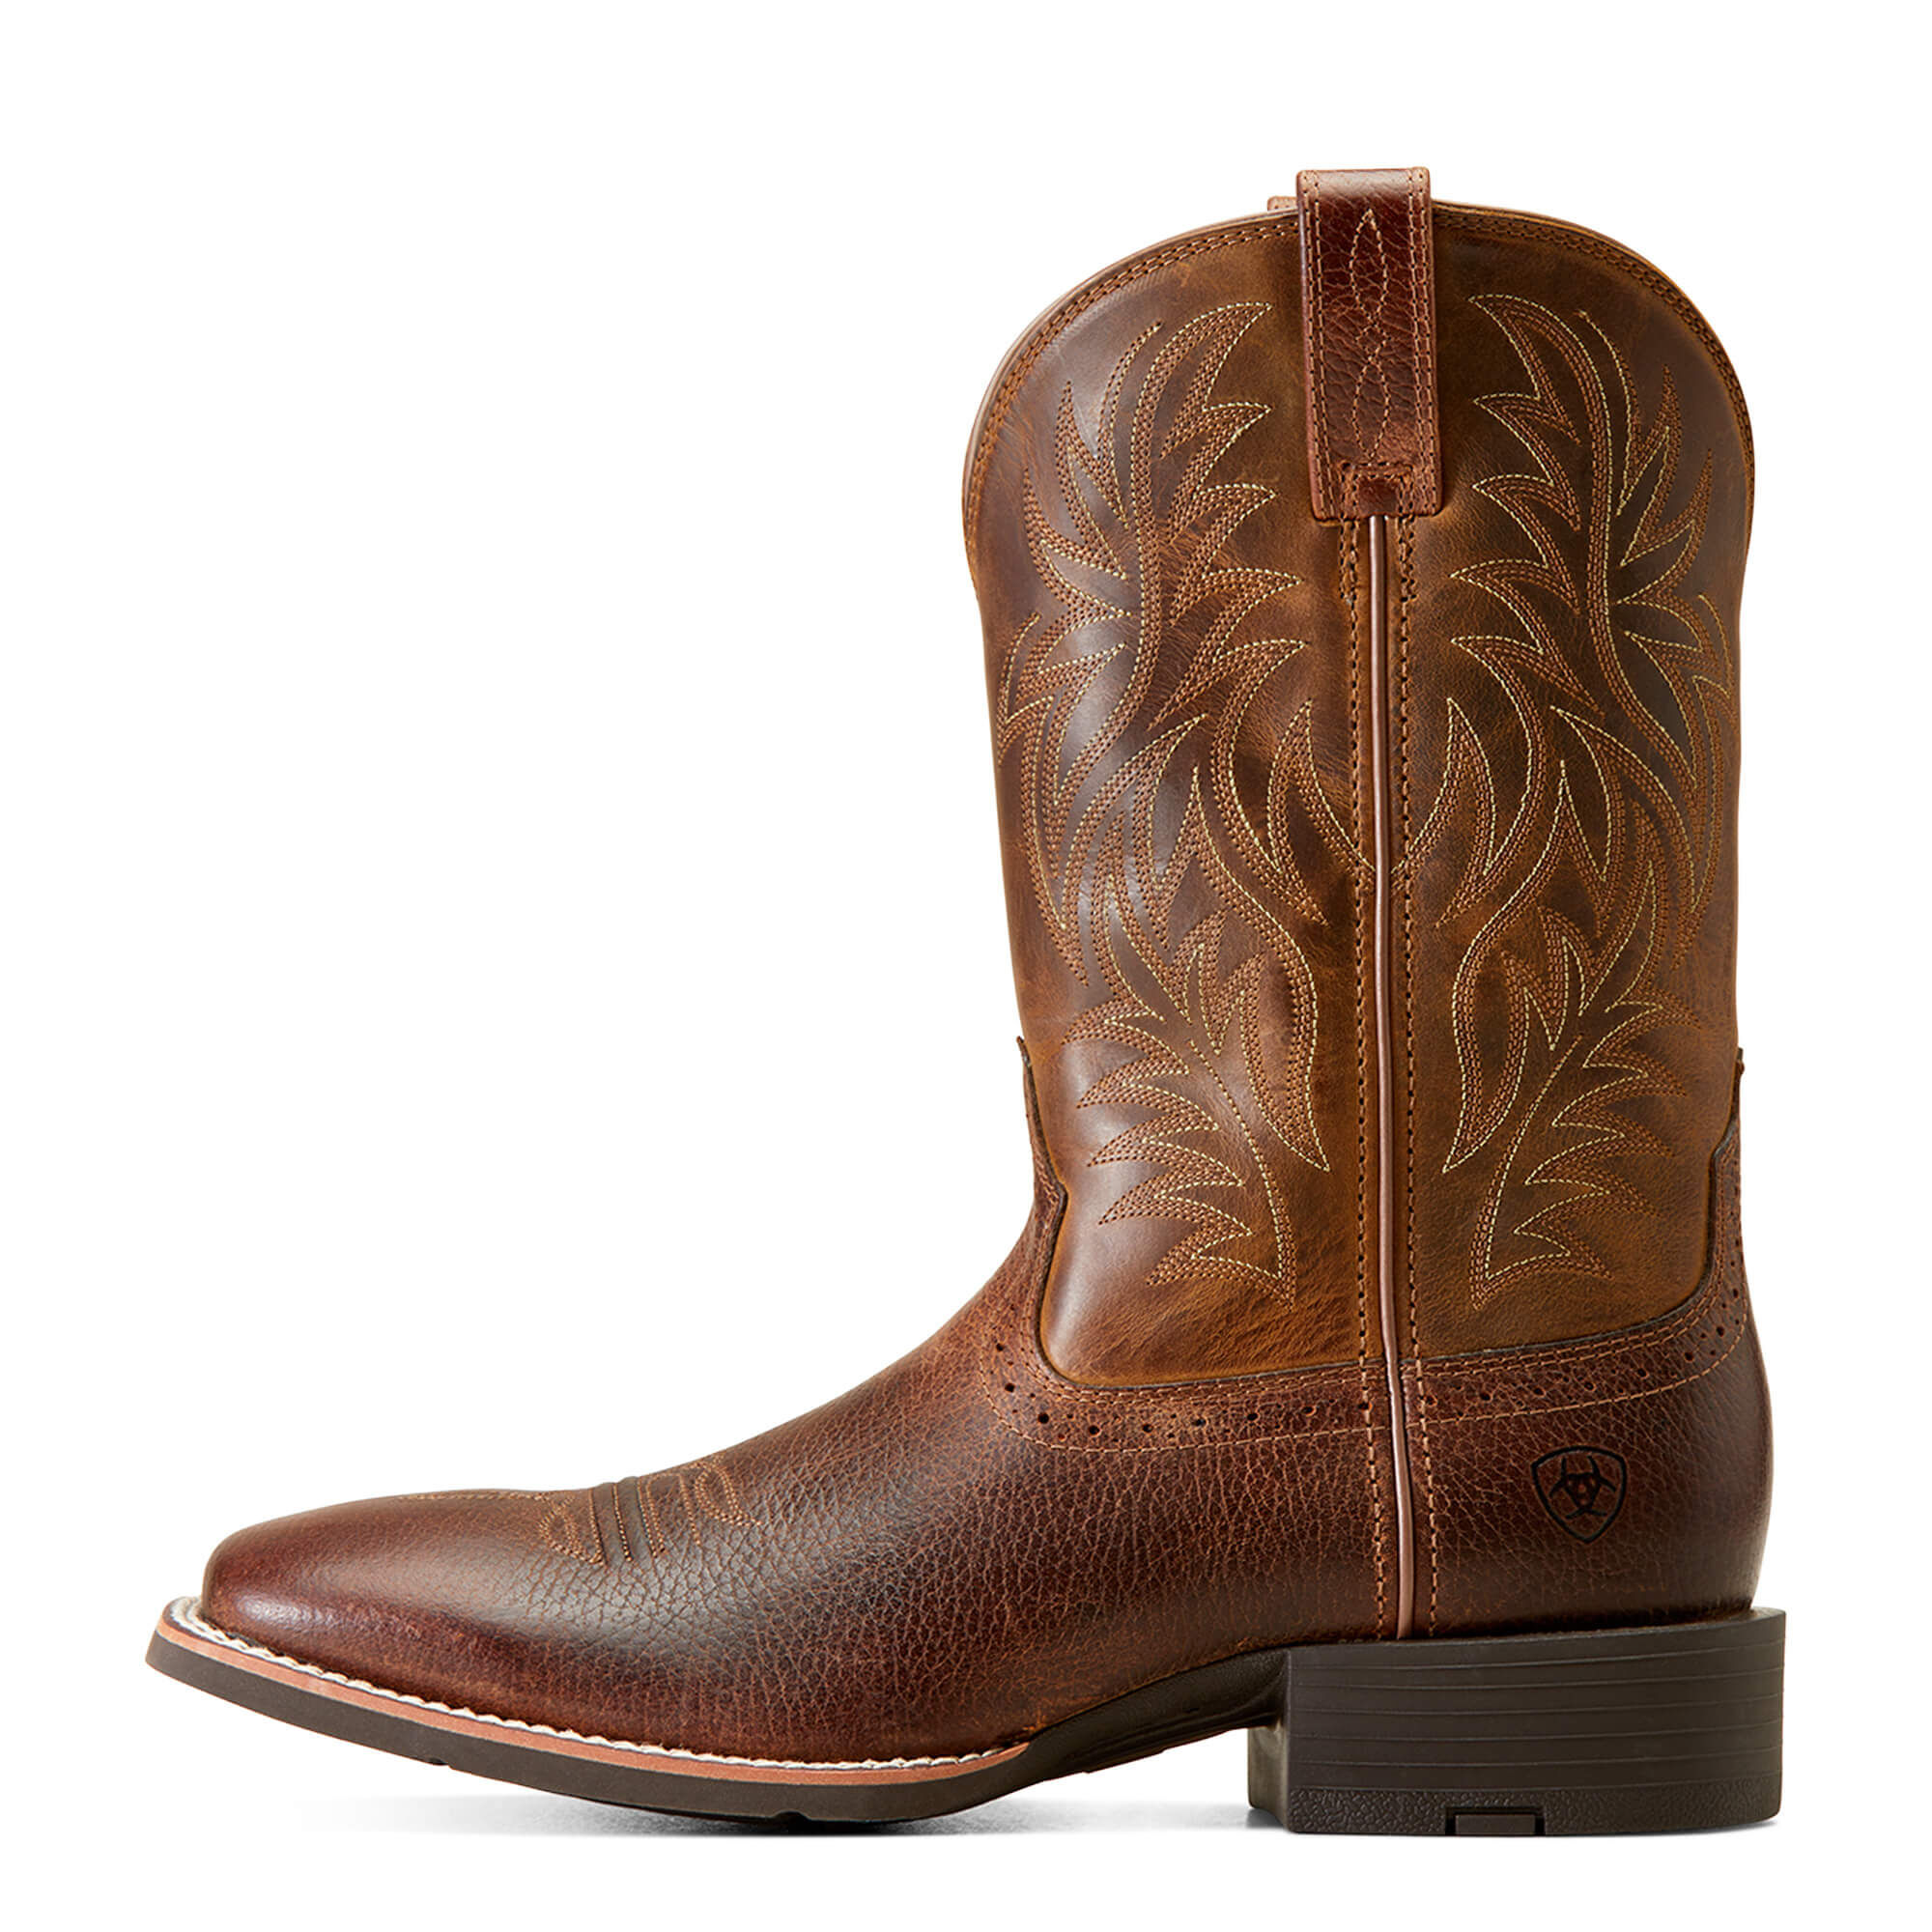 wide cowboy boots